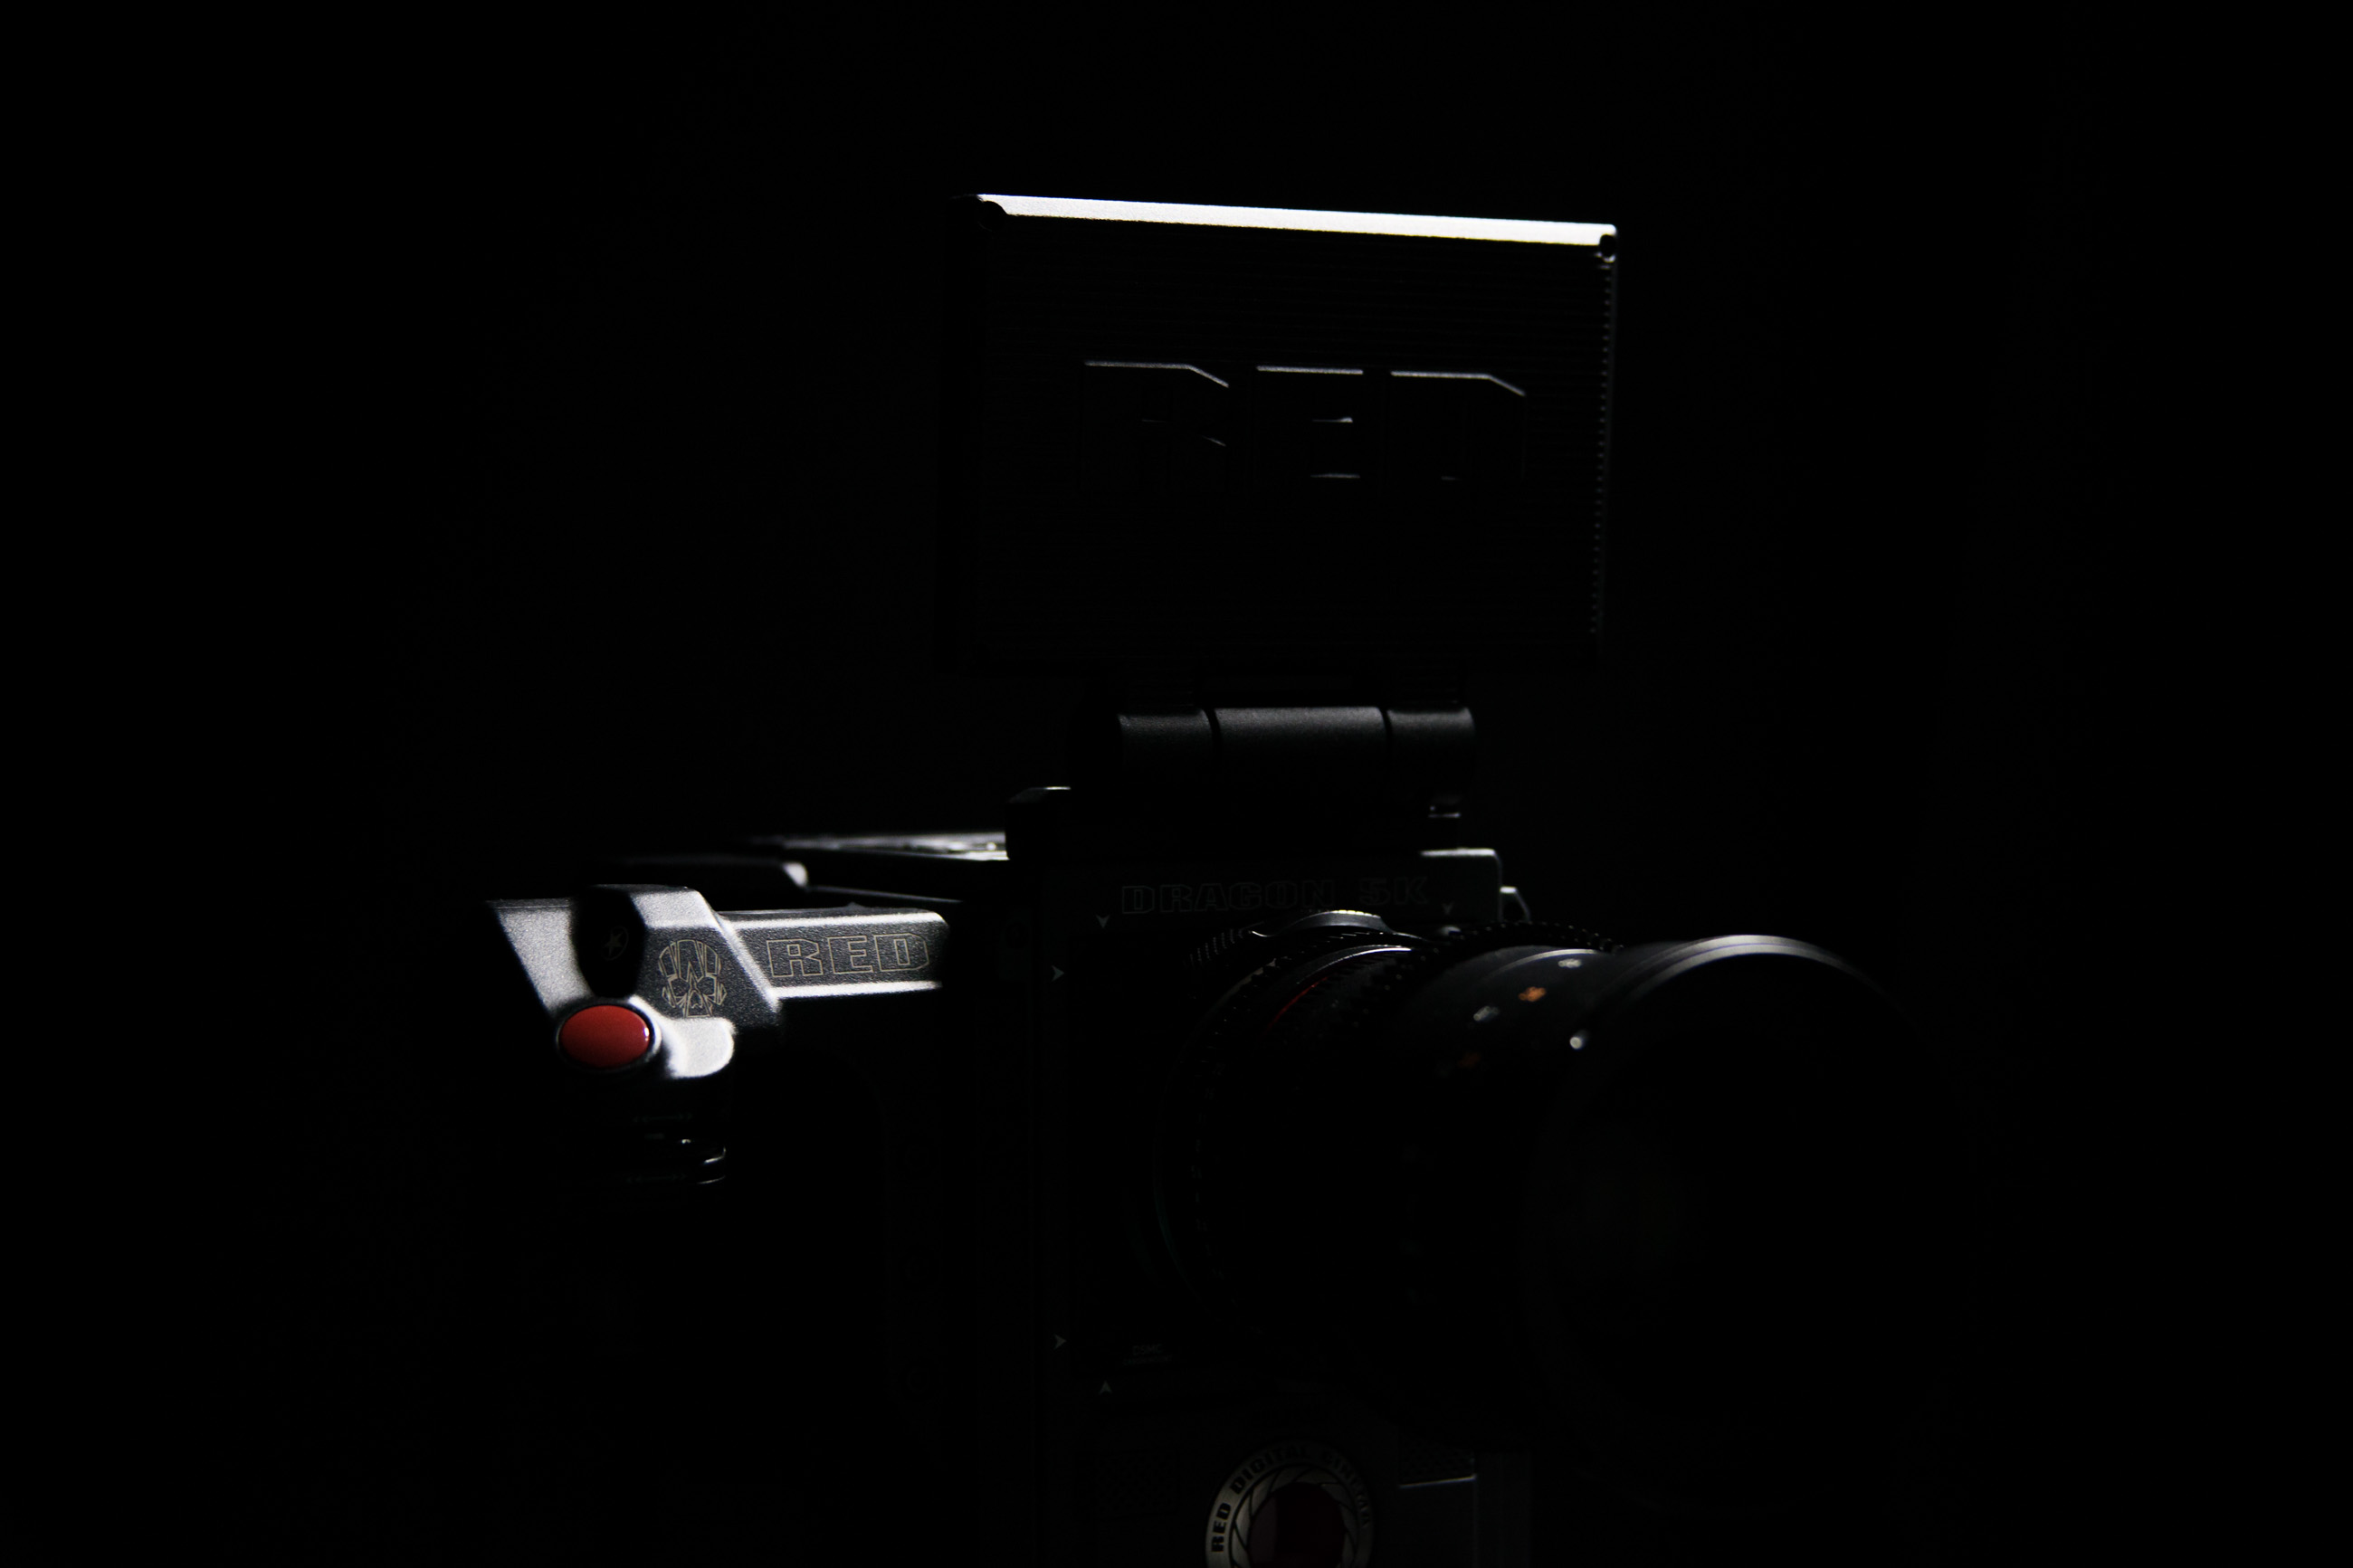 Cinema Camera in Silhouette at NJ Video Production Company